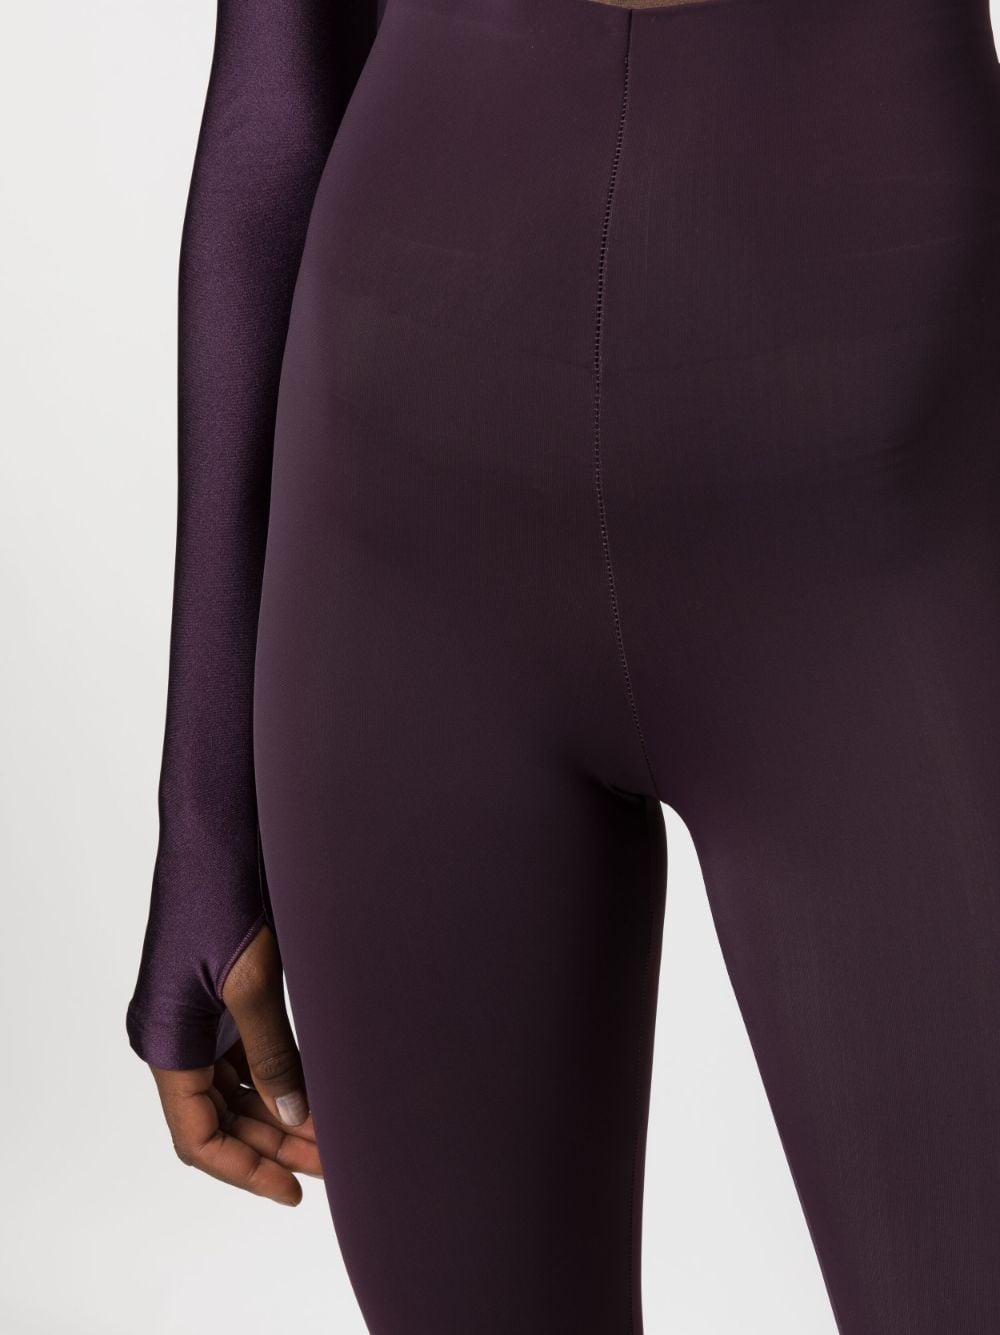 Black high-waist stirrup leggings - women - WARDROBE.NYC